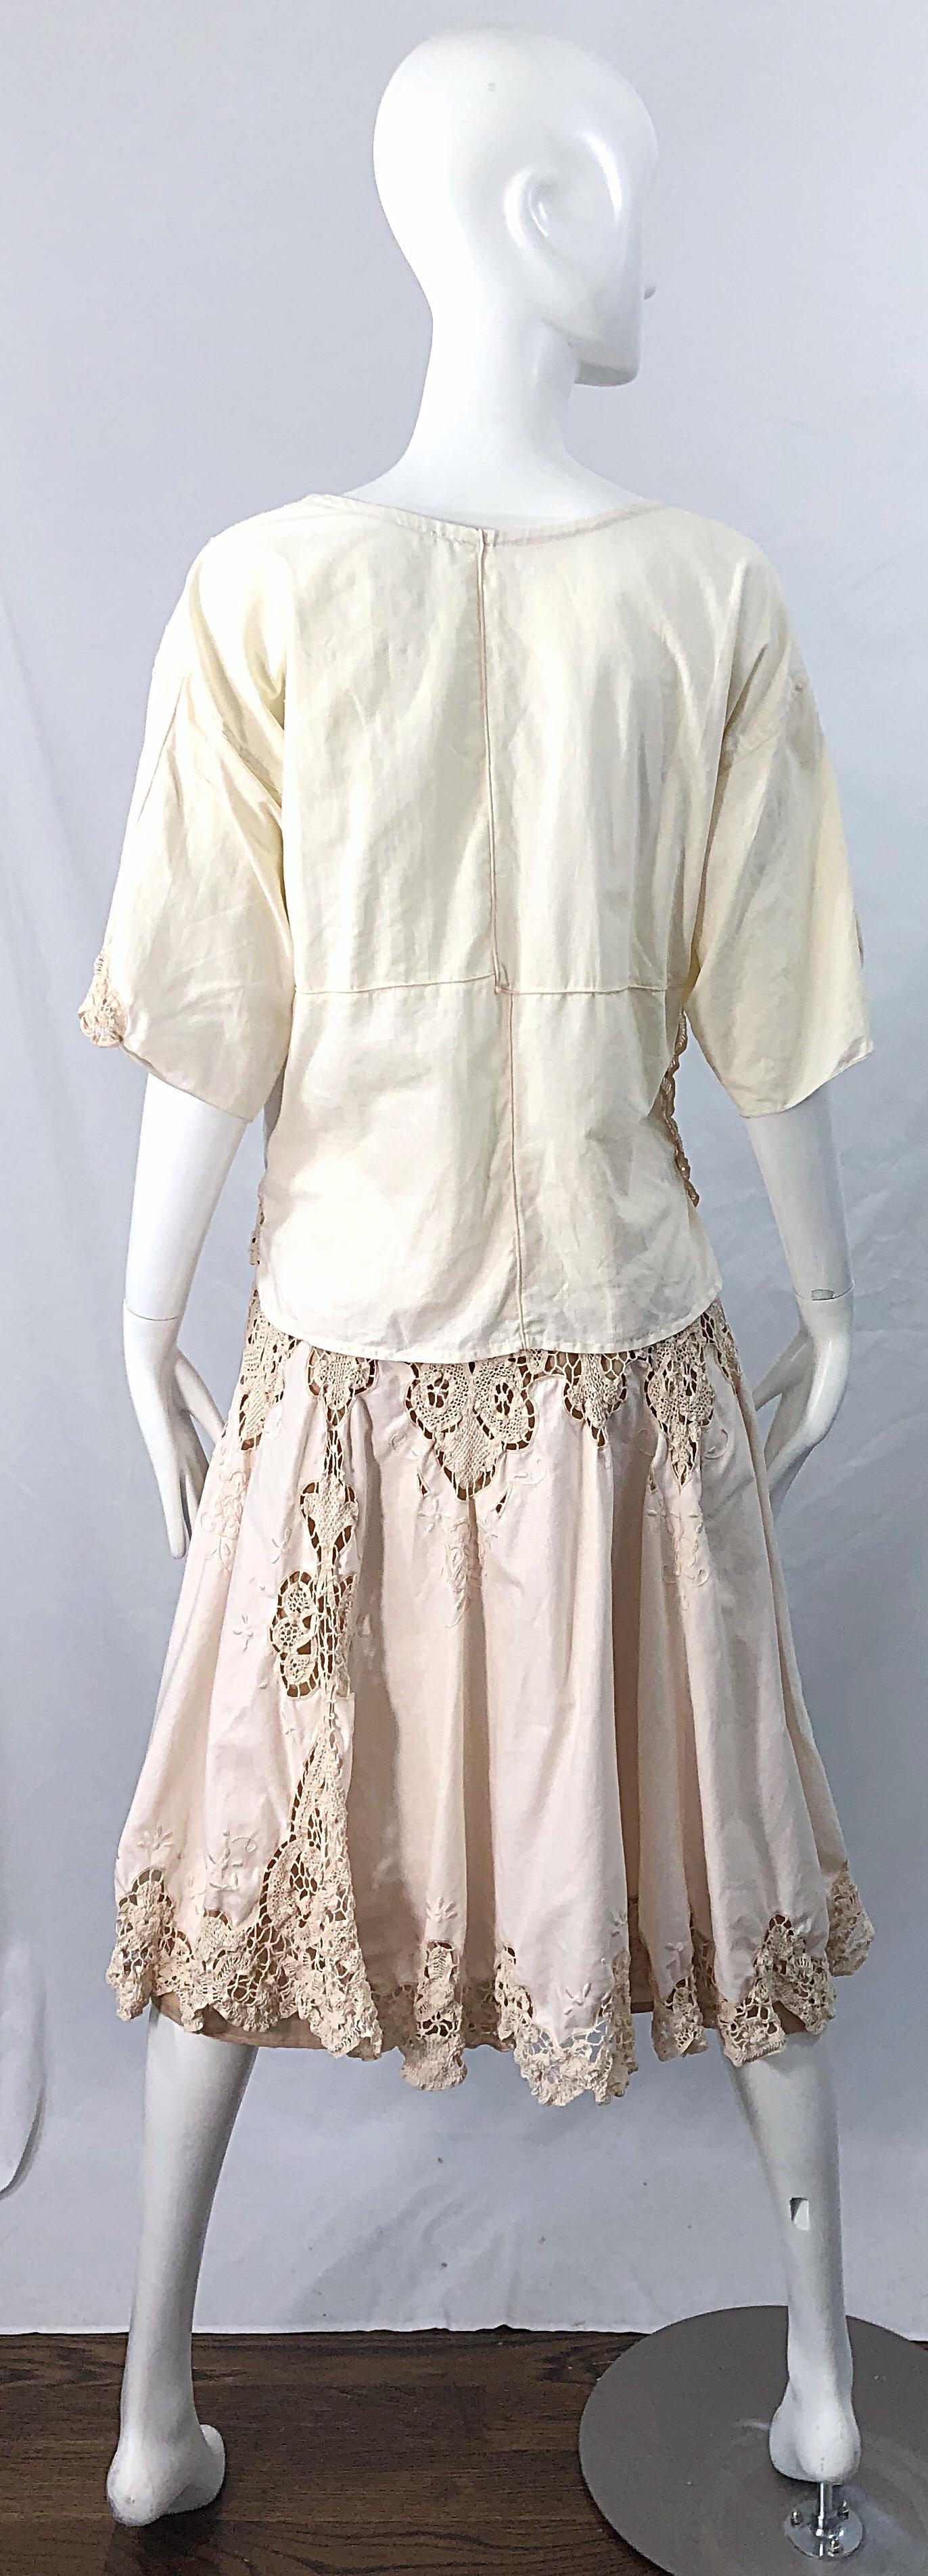 1980s Ivory Cotton Crochet Boho Shirt / Skirt Vintage 80s Dress Ensemble Set 8